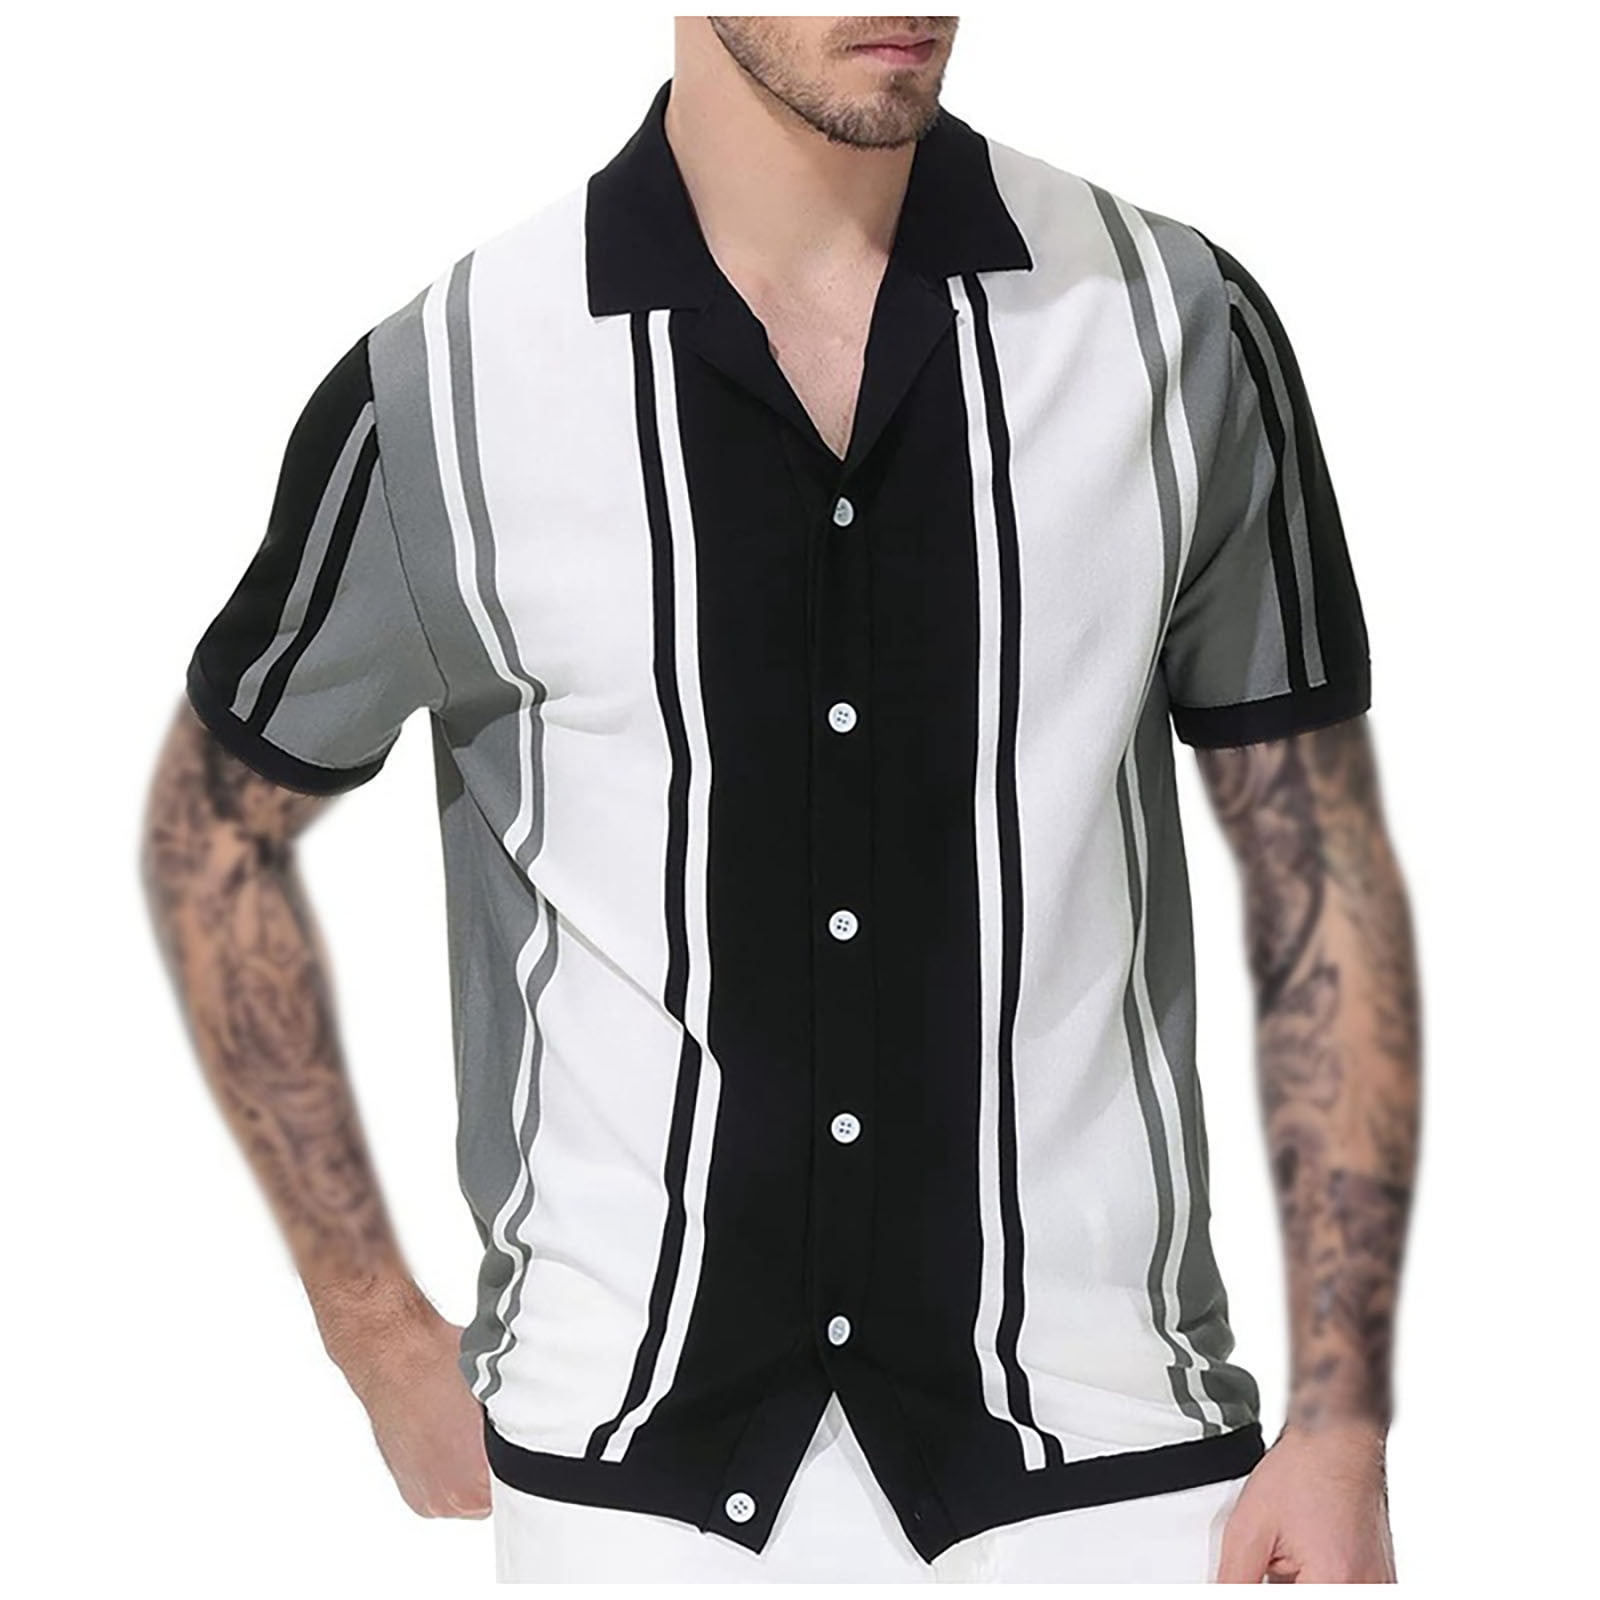 Juebong Fashion Knit Polo Shirts for Men Black Cardigan Slim Fit